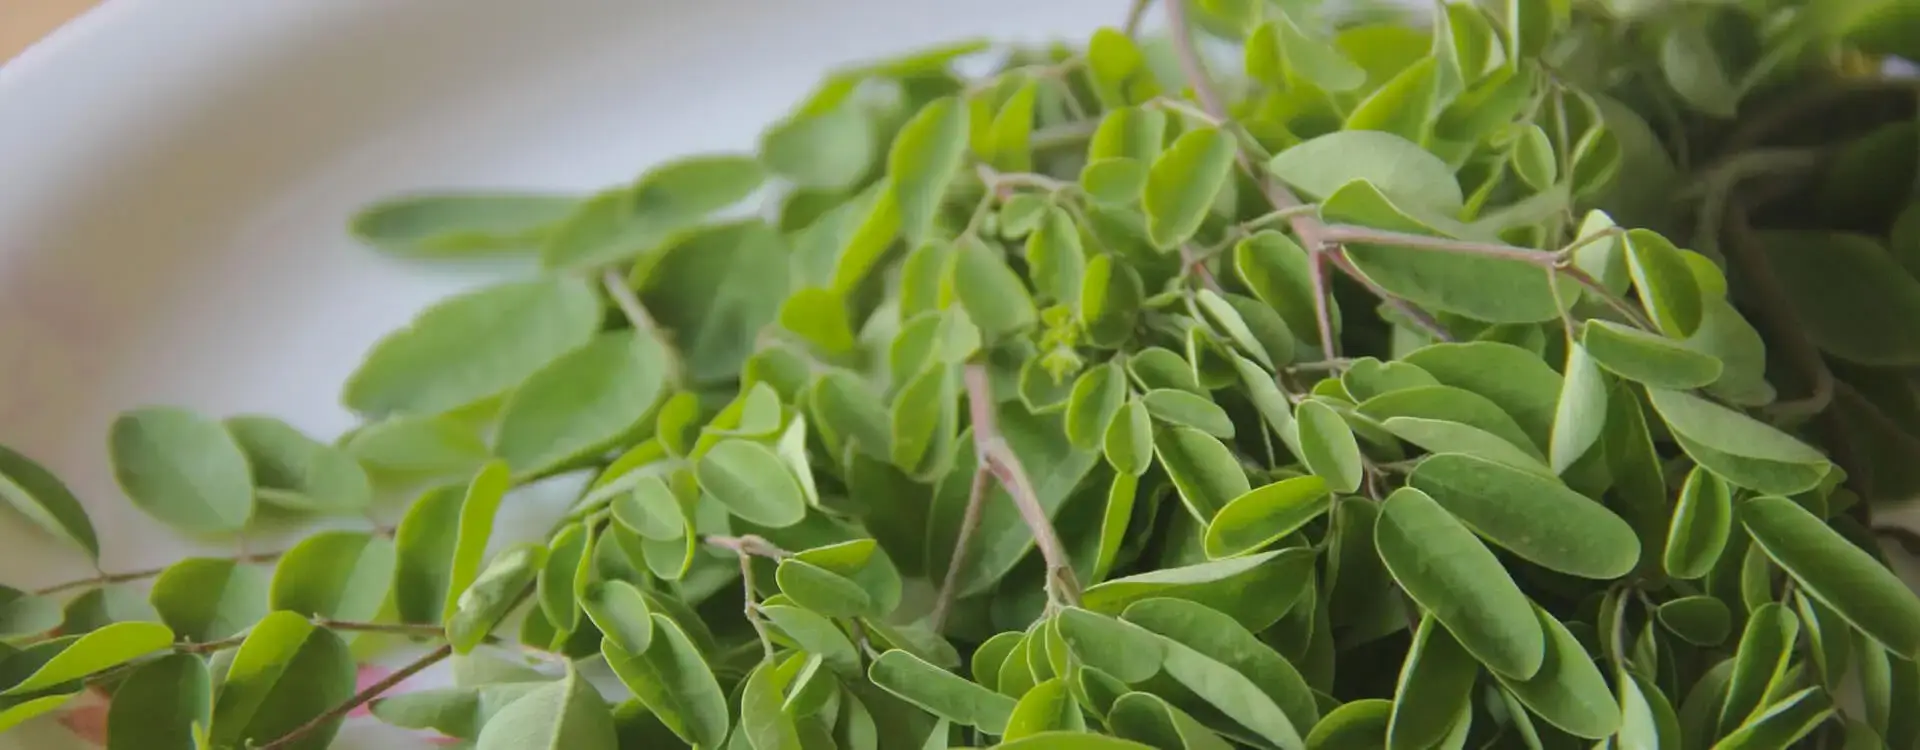 Green-moringa-leaves